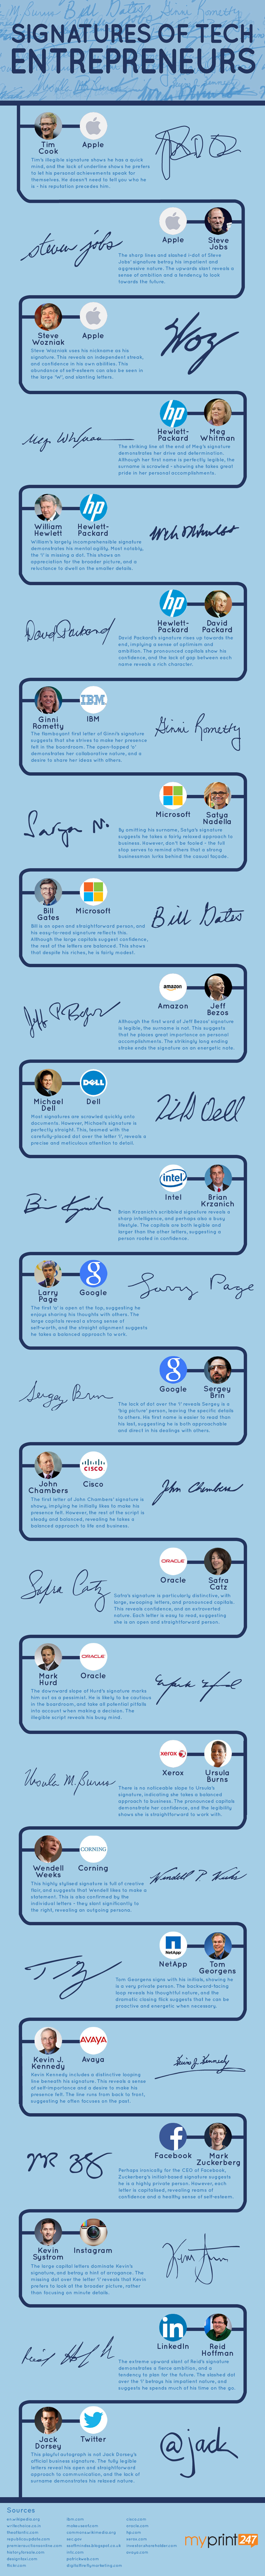 What Tech Entrepreneurs Signatures Say About Them